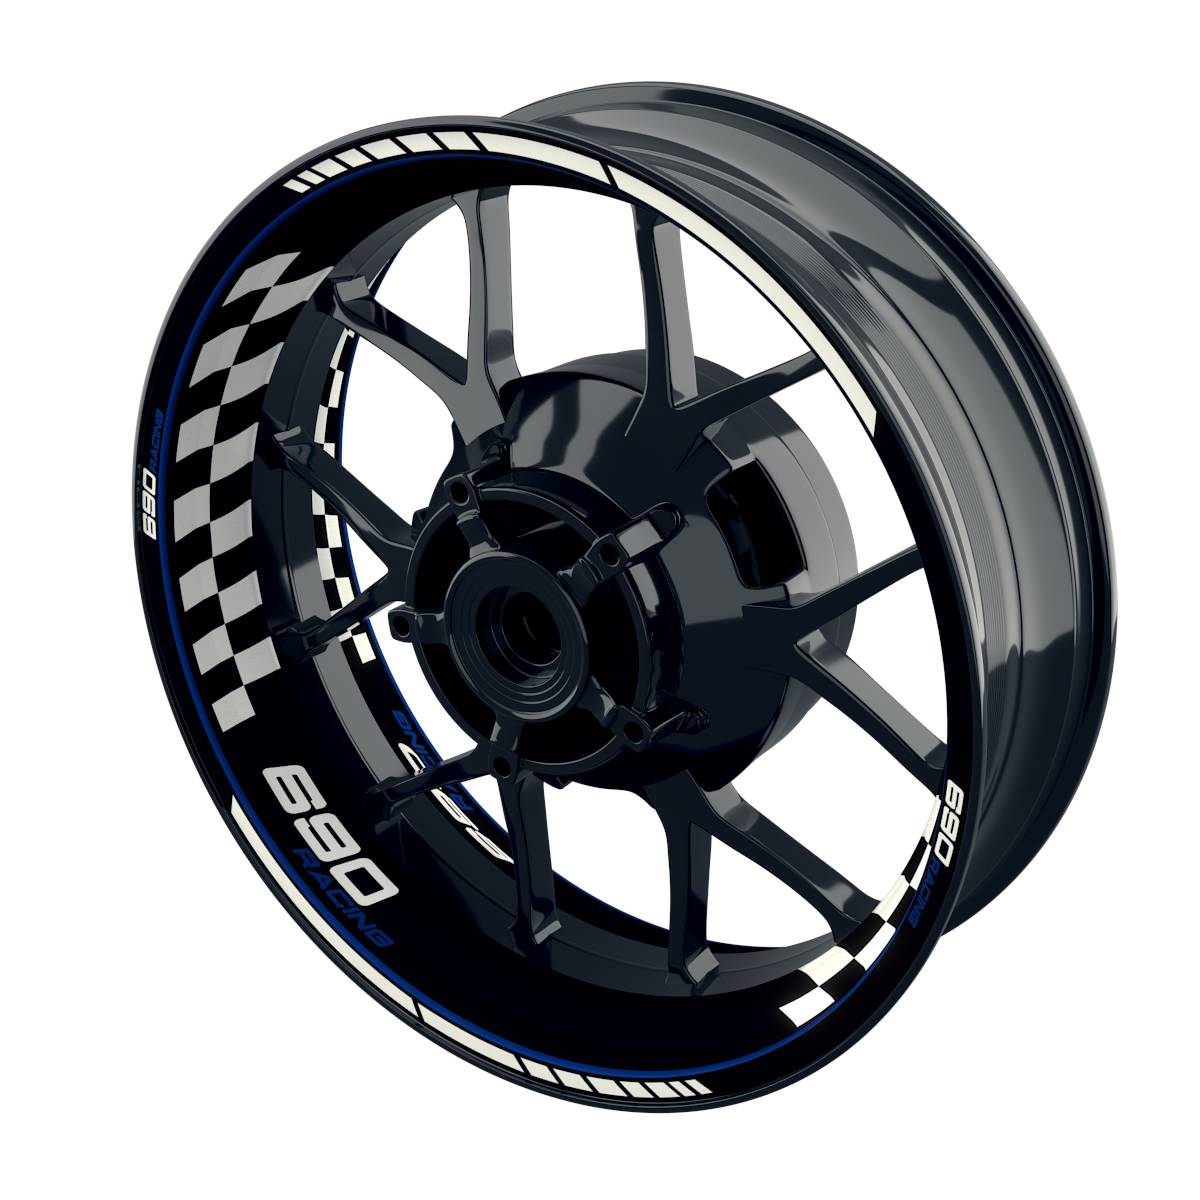 690 Racing Rim Decals Grid Wheelsticker Premium